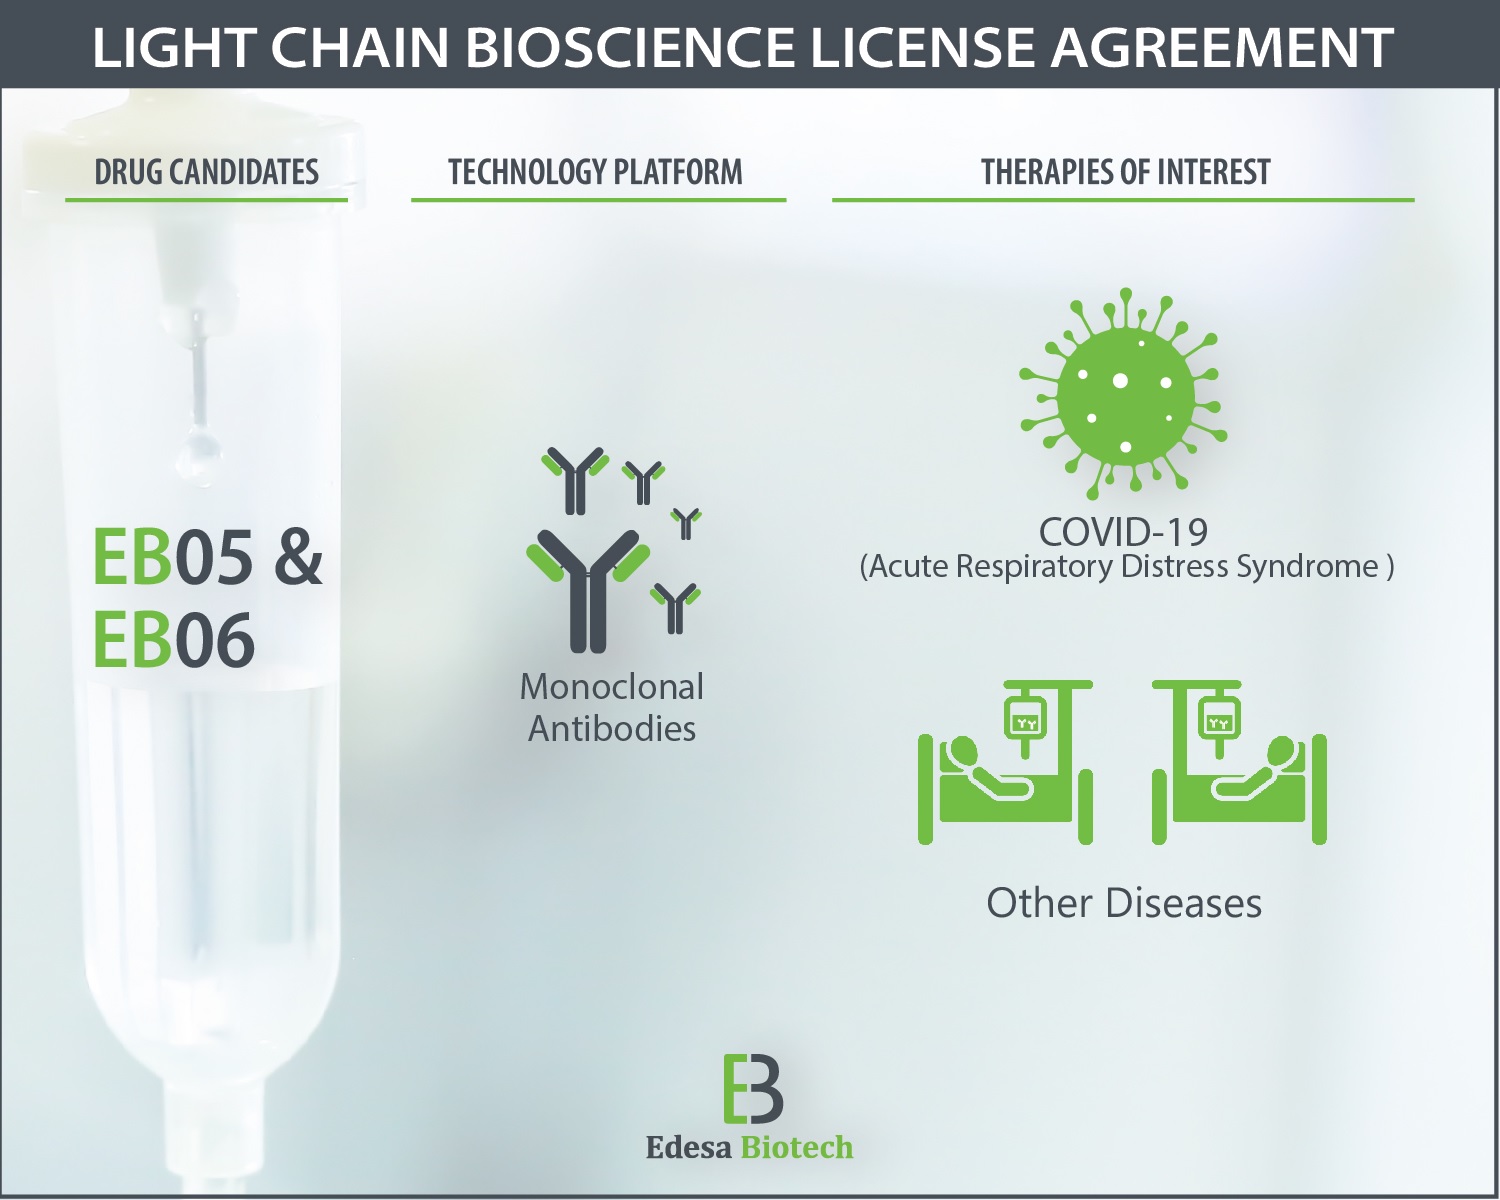 Edesa Biotech, Monday, April 20, 2020, Press release picture